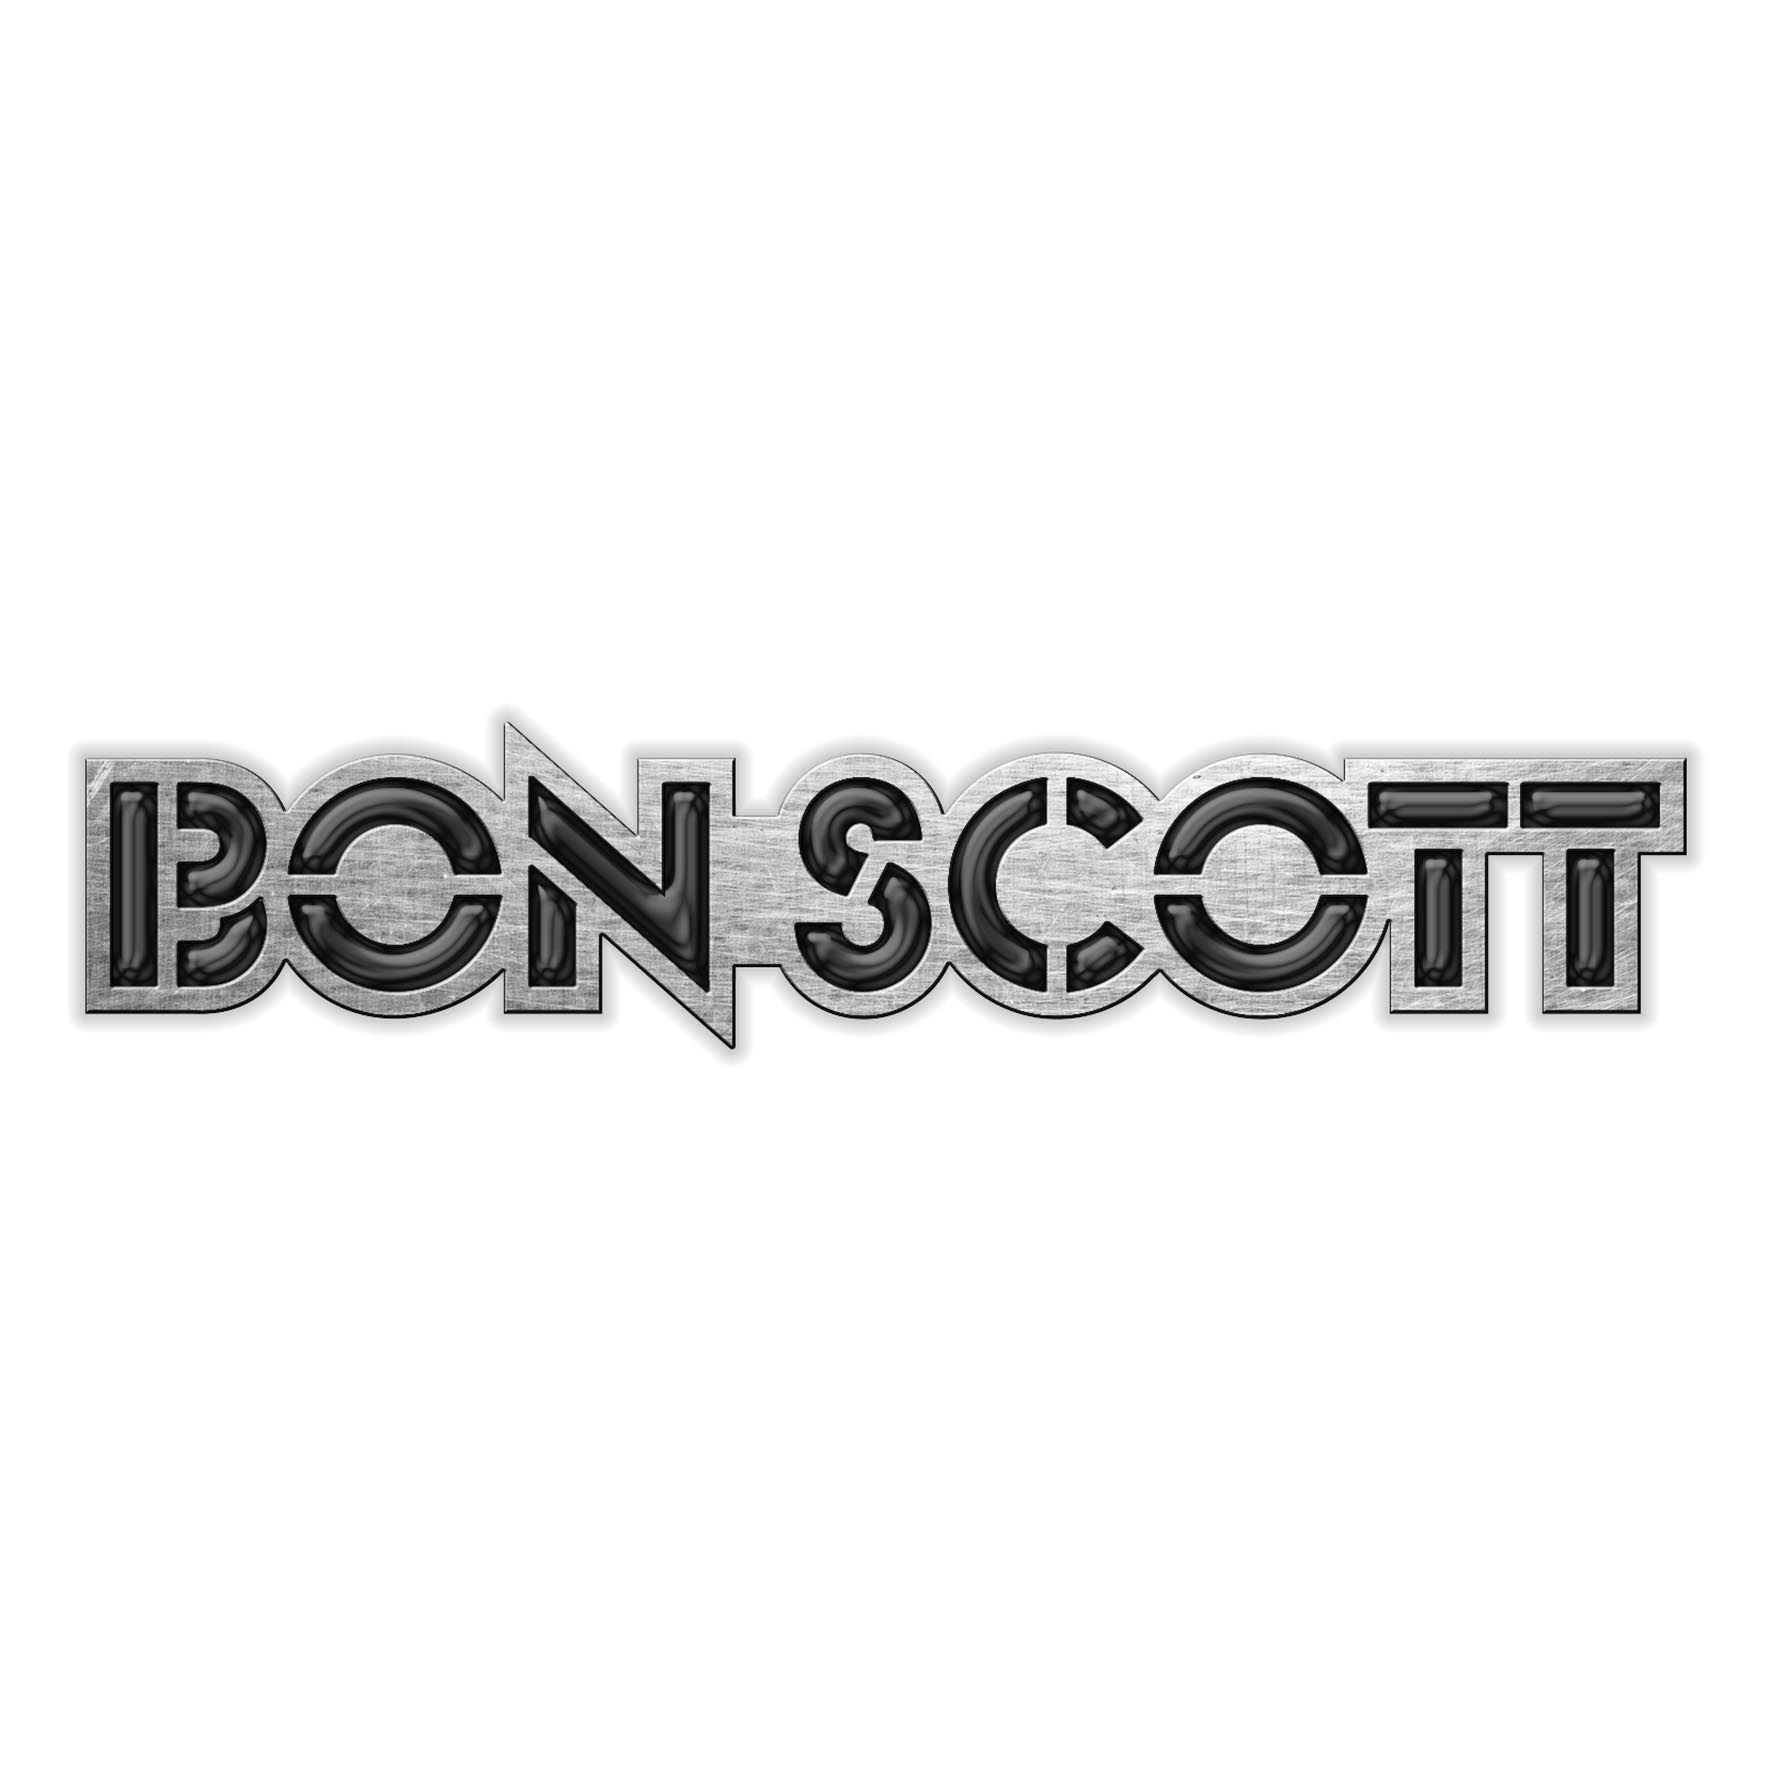 ACDC - Pin Badge - Bon Scott